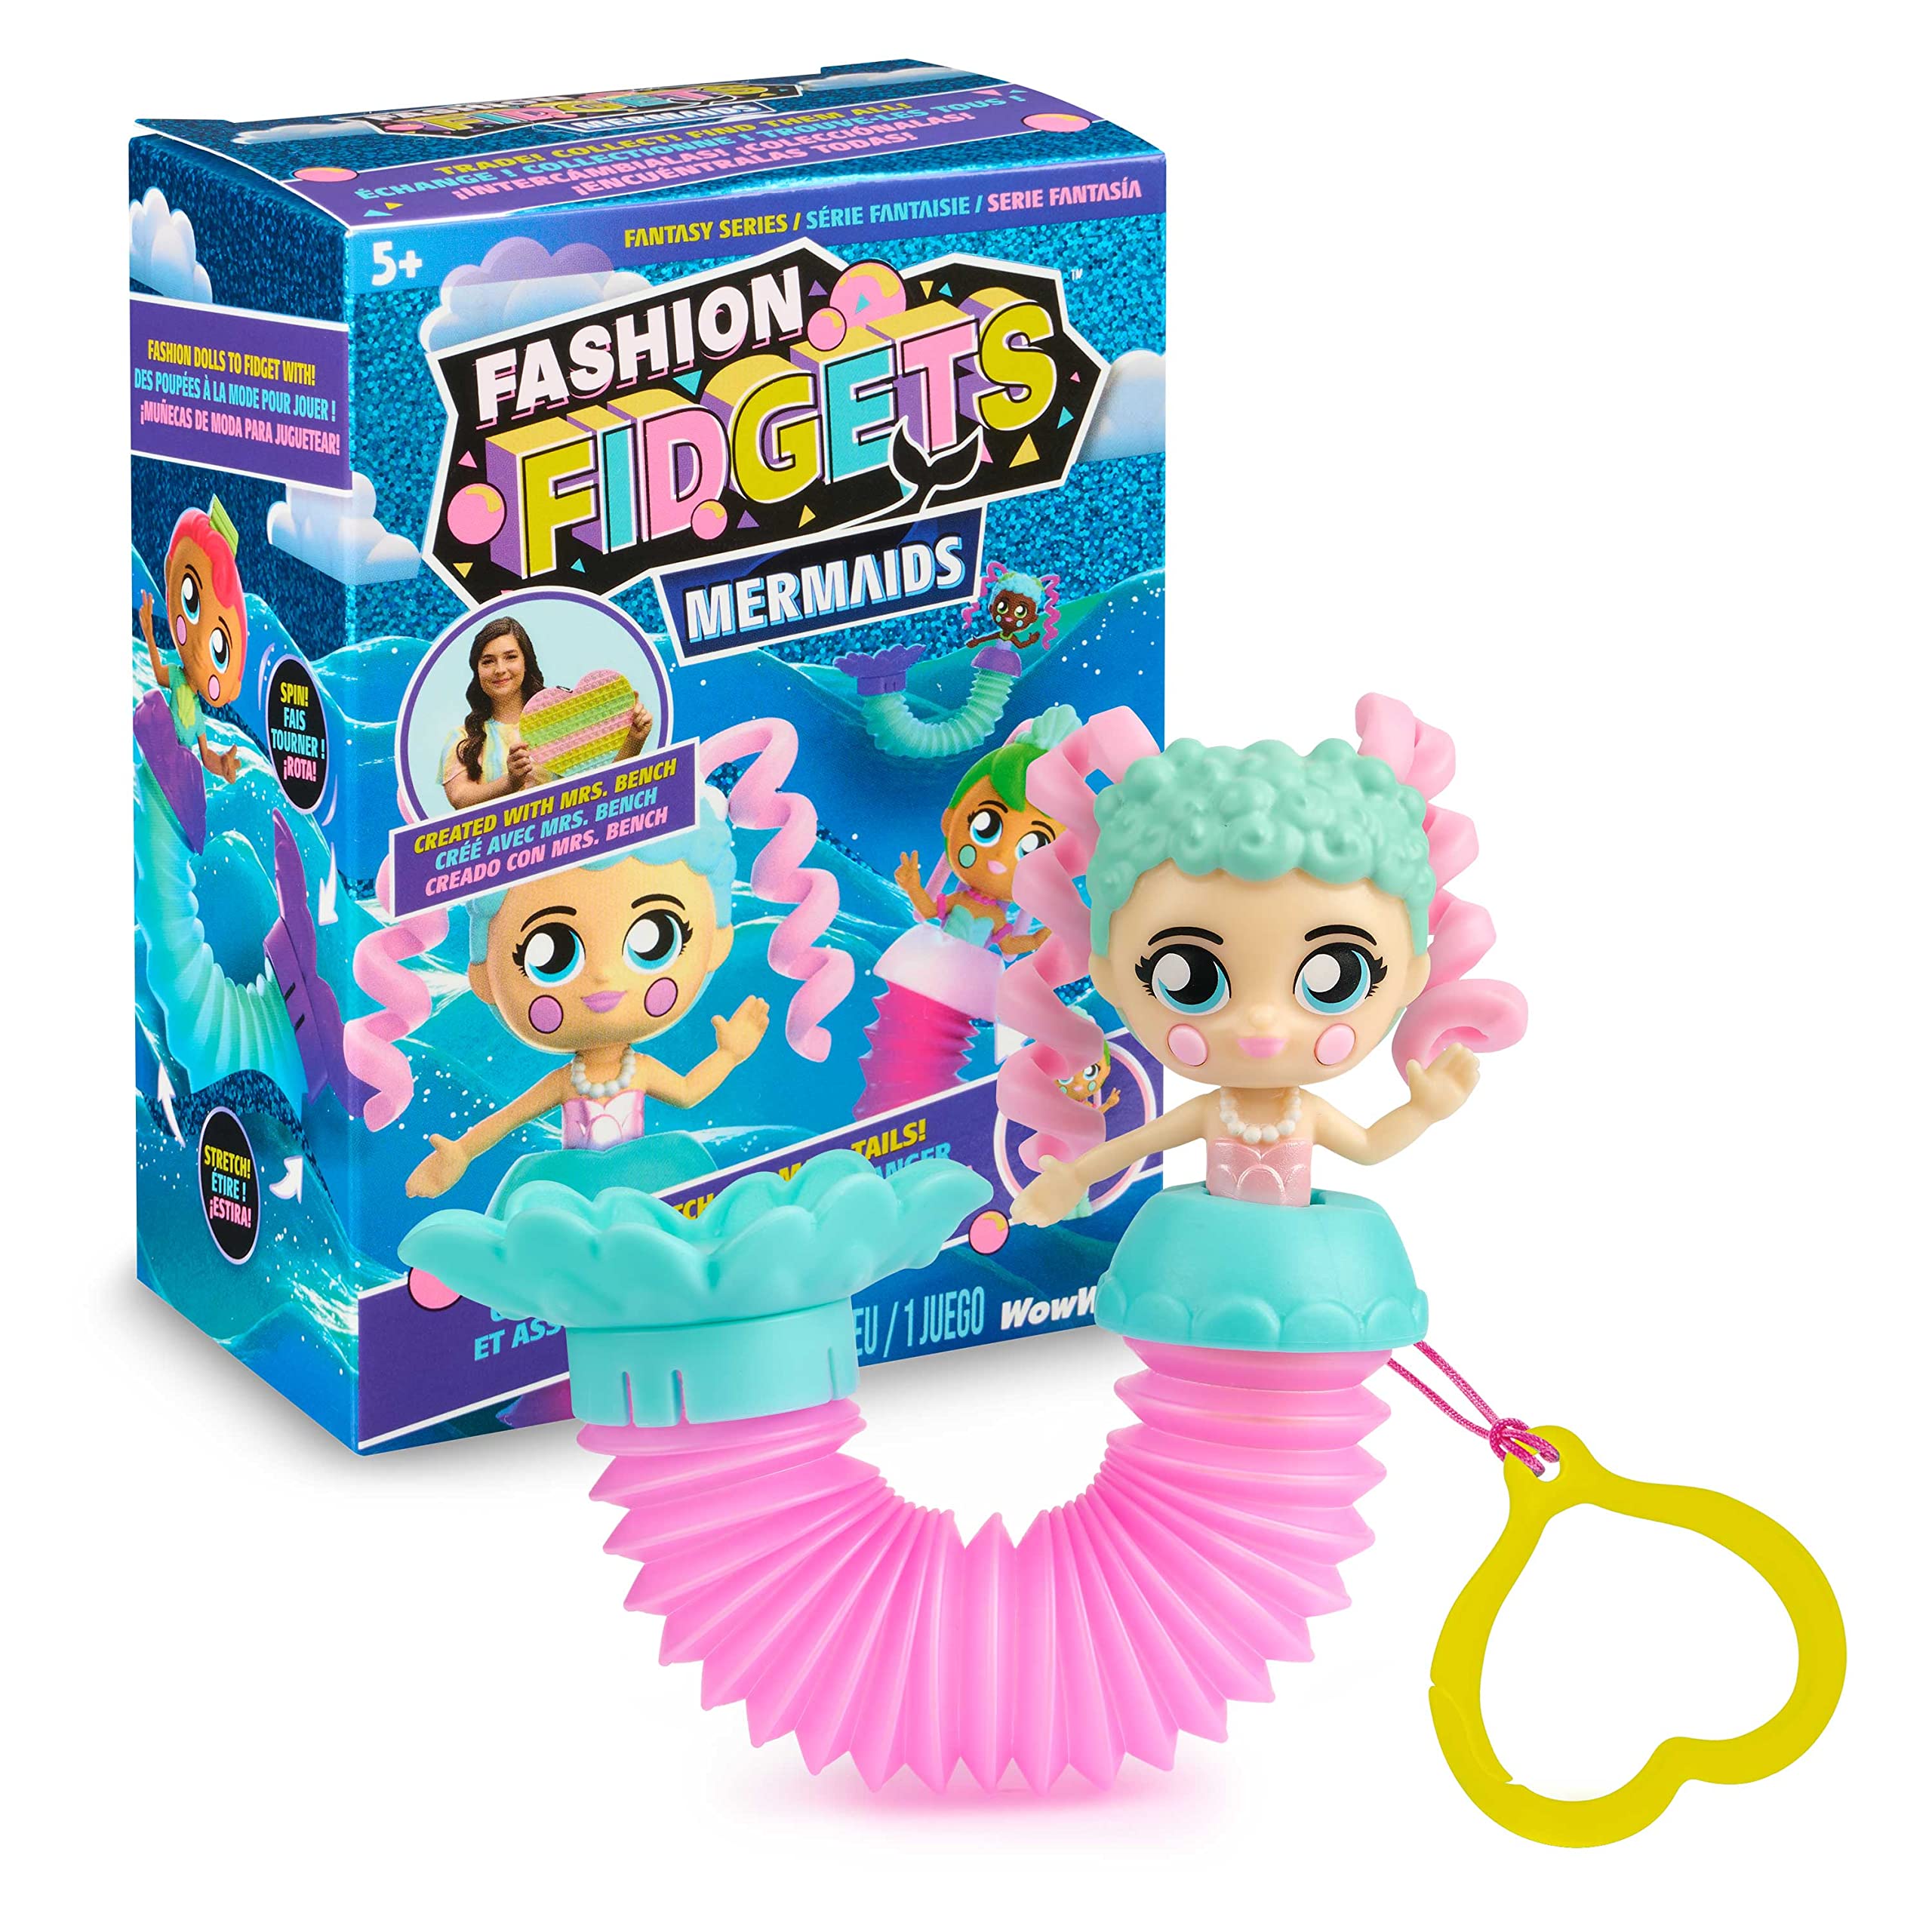 WowWee Girls' Fashion Fidgets Mermaids Fantasy Series Fidget Toy Doll $4 + Free Shipping w/ Prime or on $35+